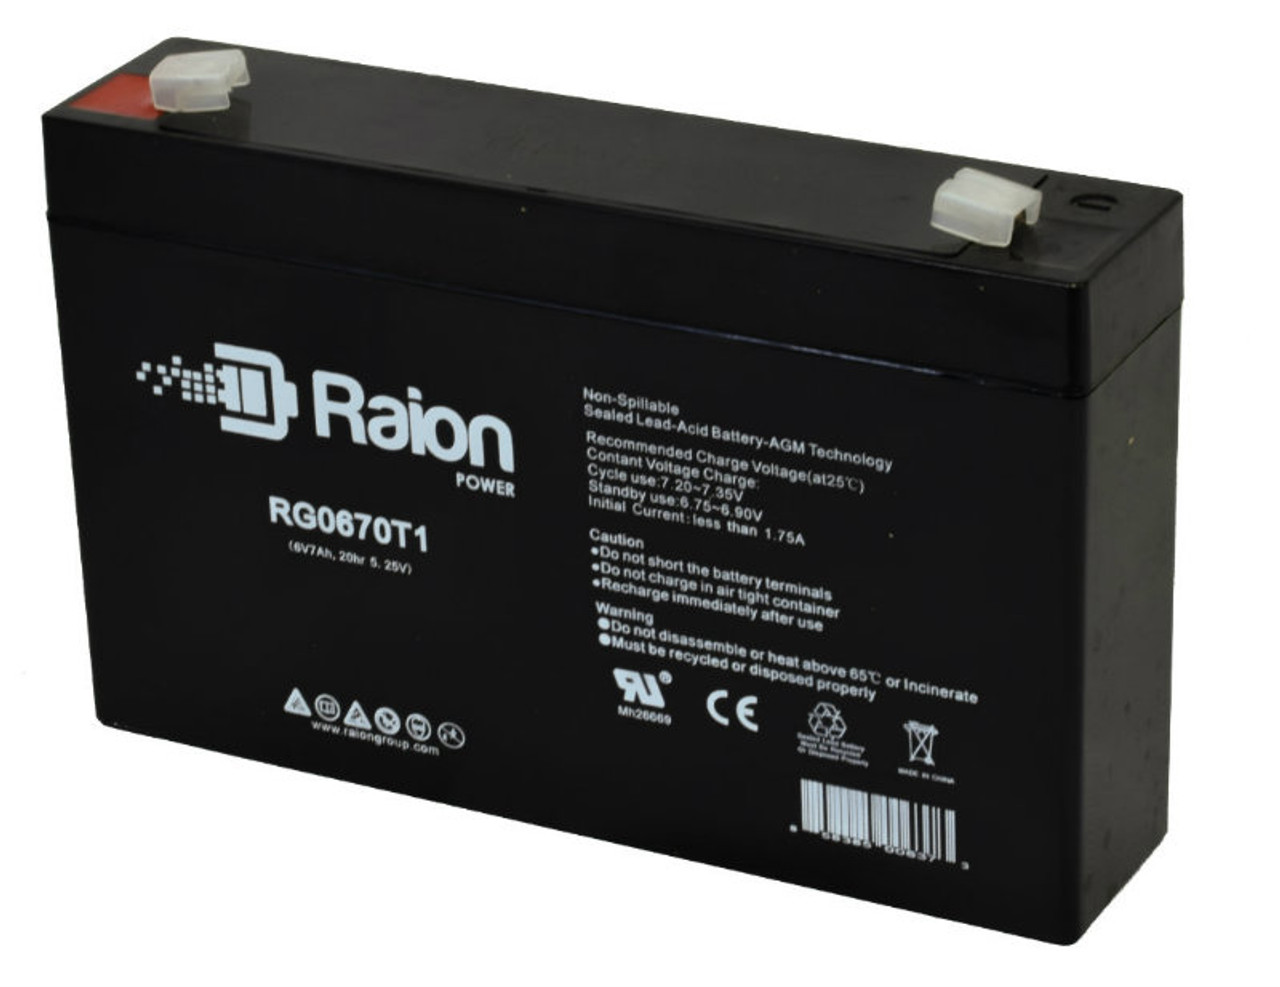 Raion Power RG0670T1 6V 7Ah Replacement Emergency Lighting Battery for Sure-Lites 12V1505